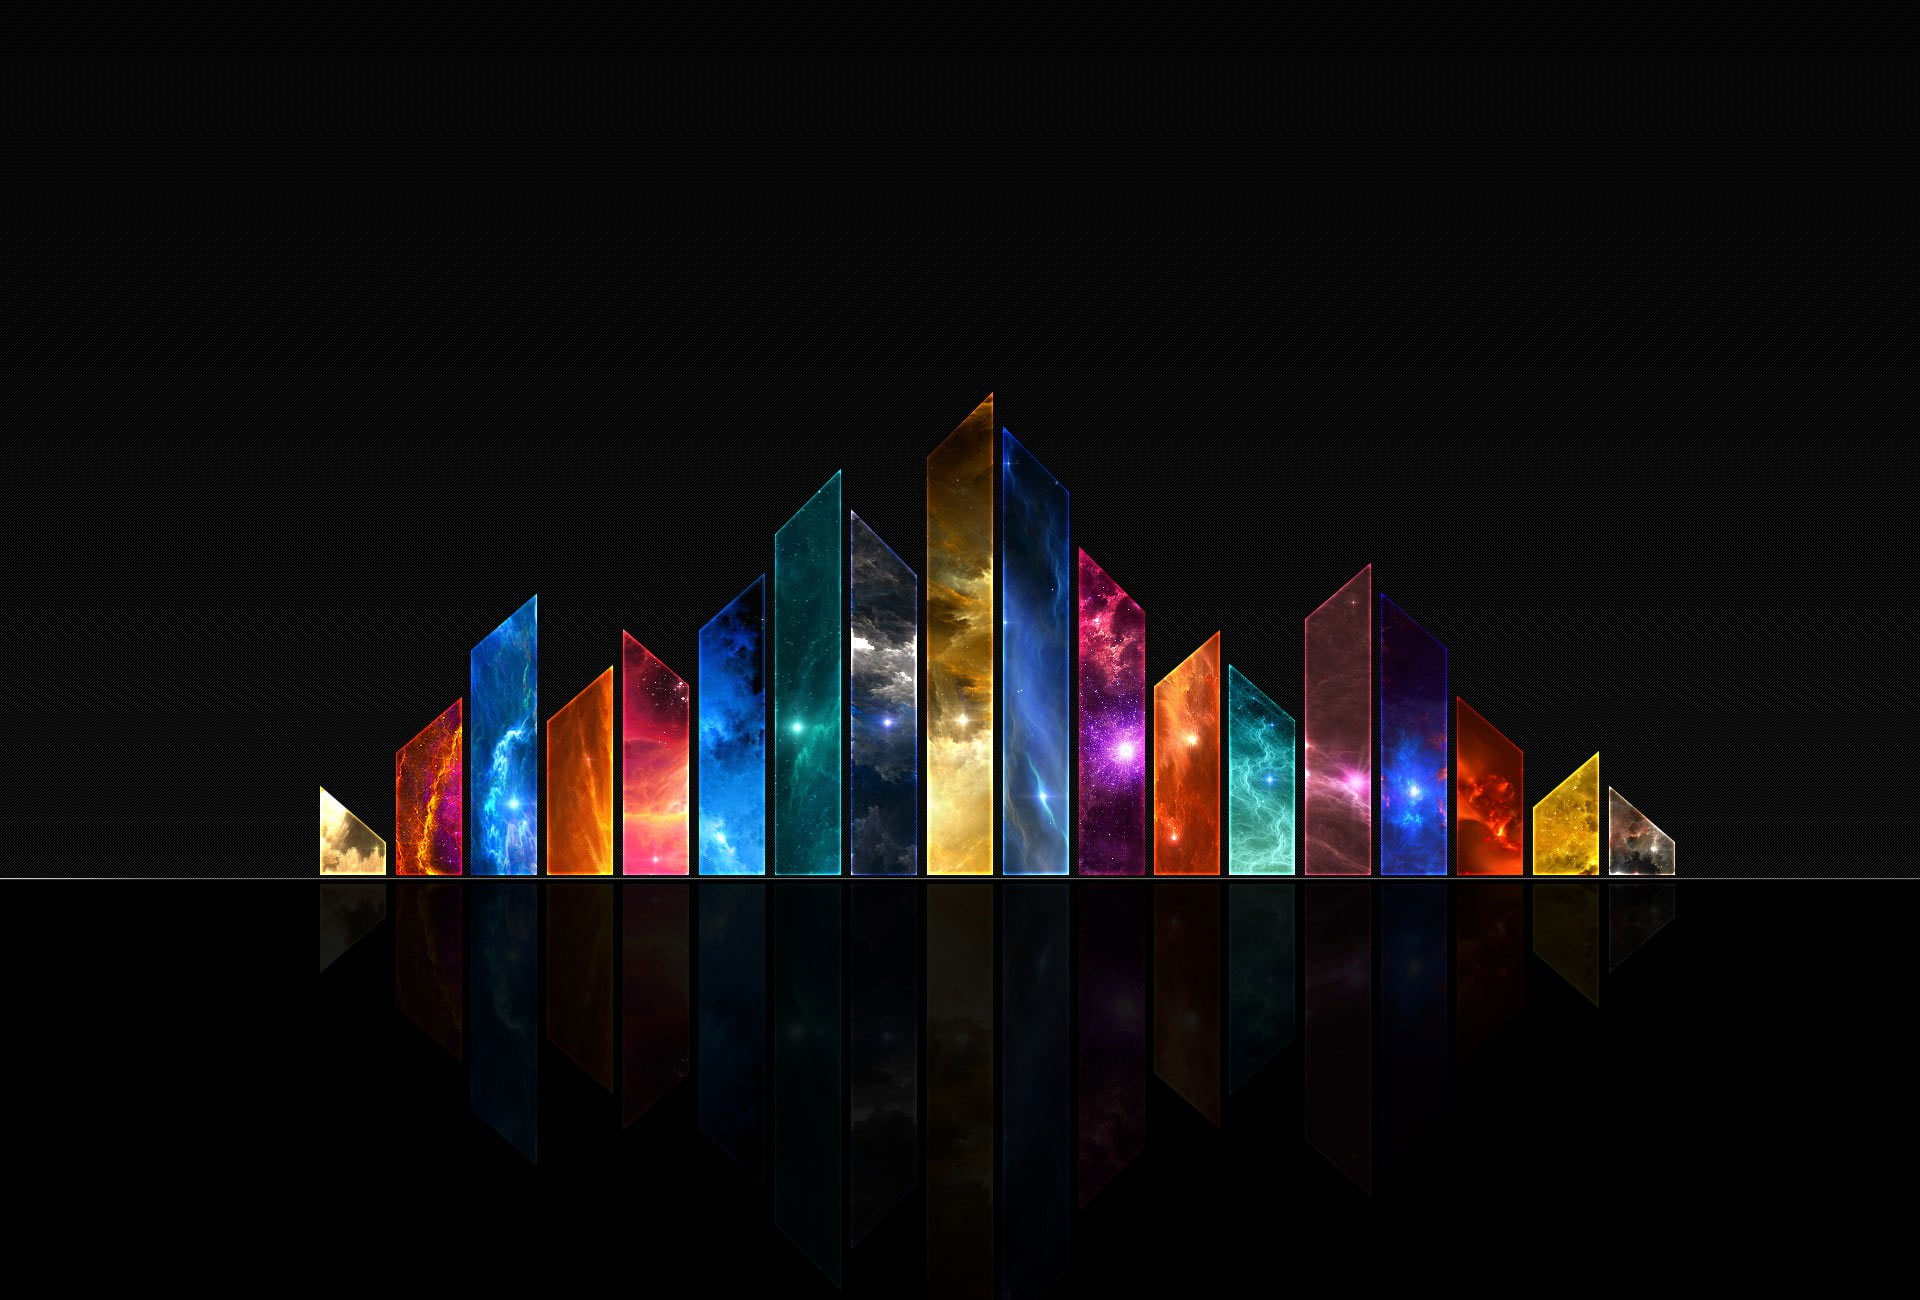 Multicolored logo digital artwork wallpaper, simple, simple background